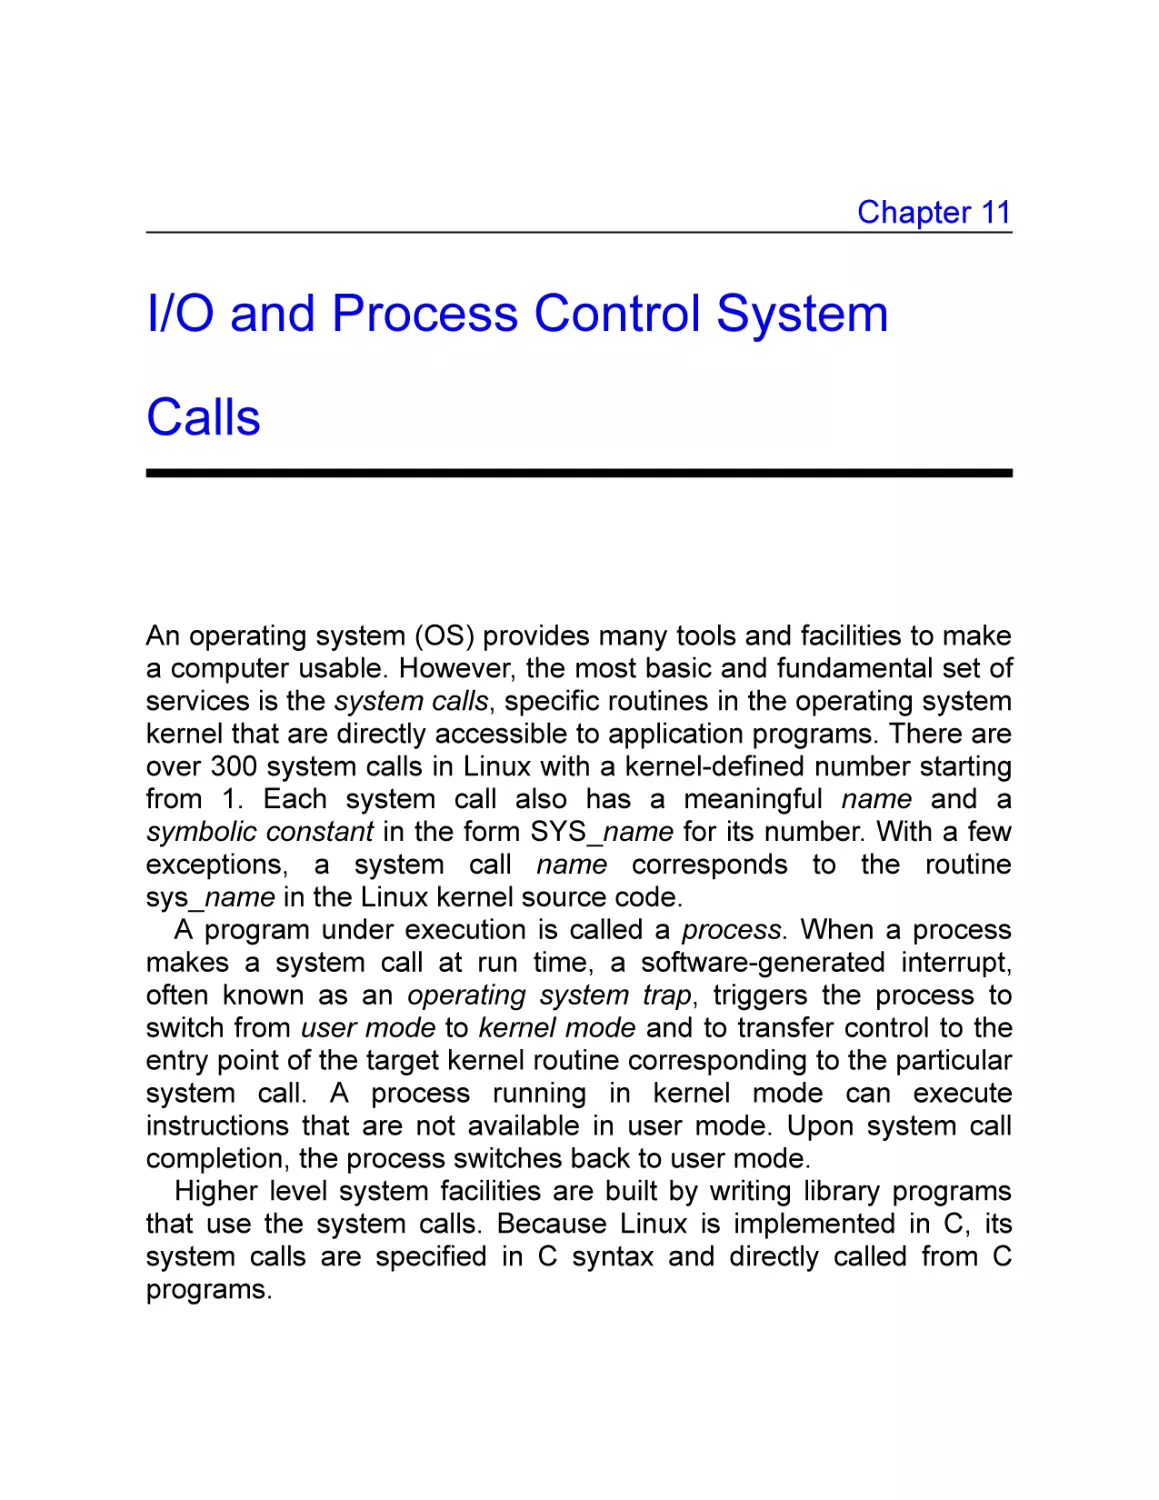 11 I/O and Process Control System Calls